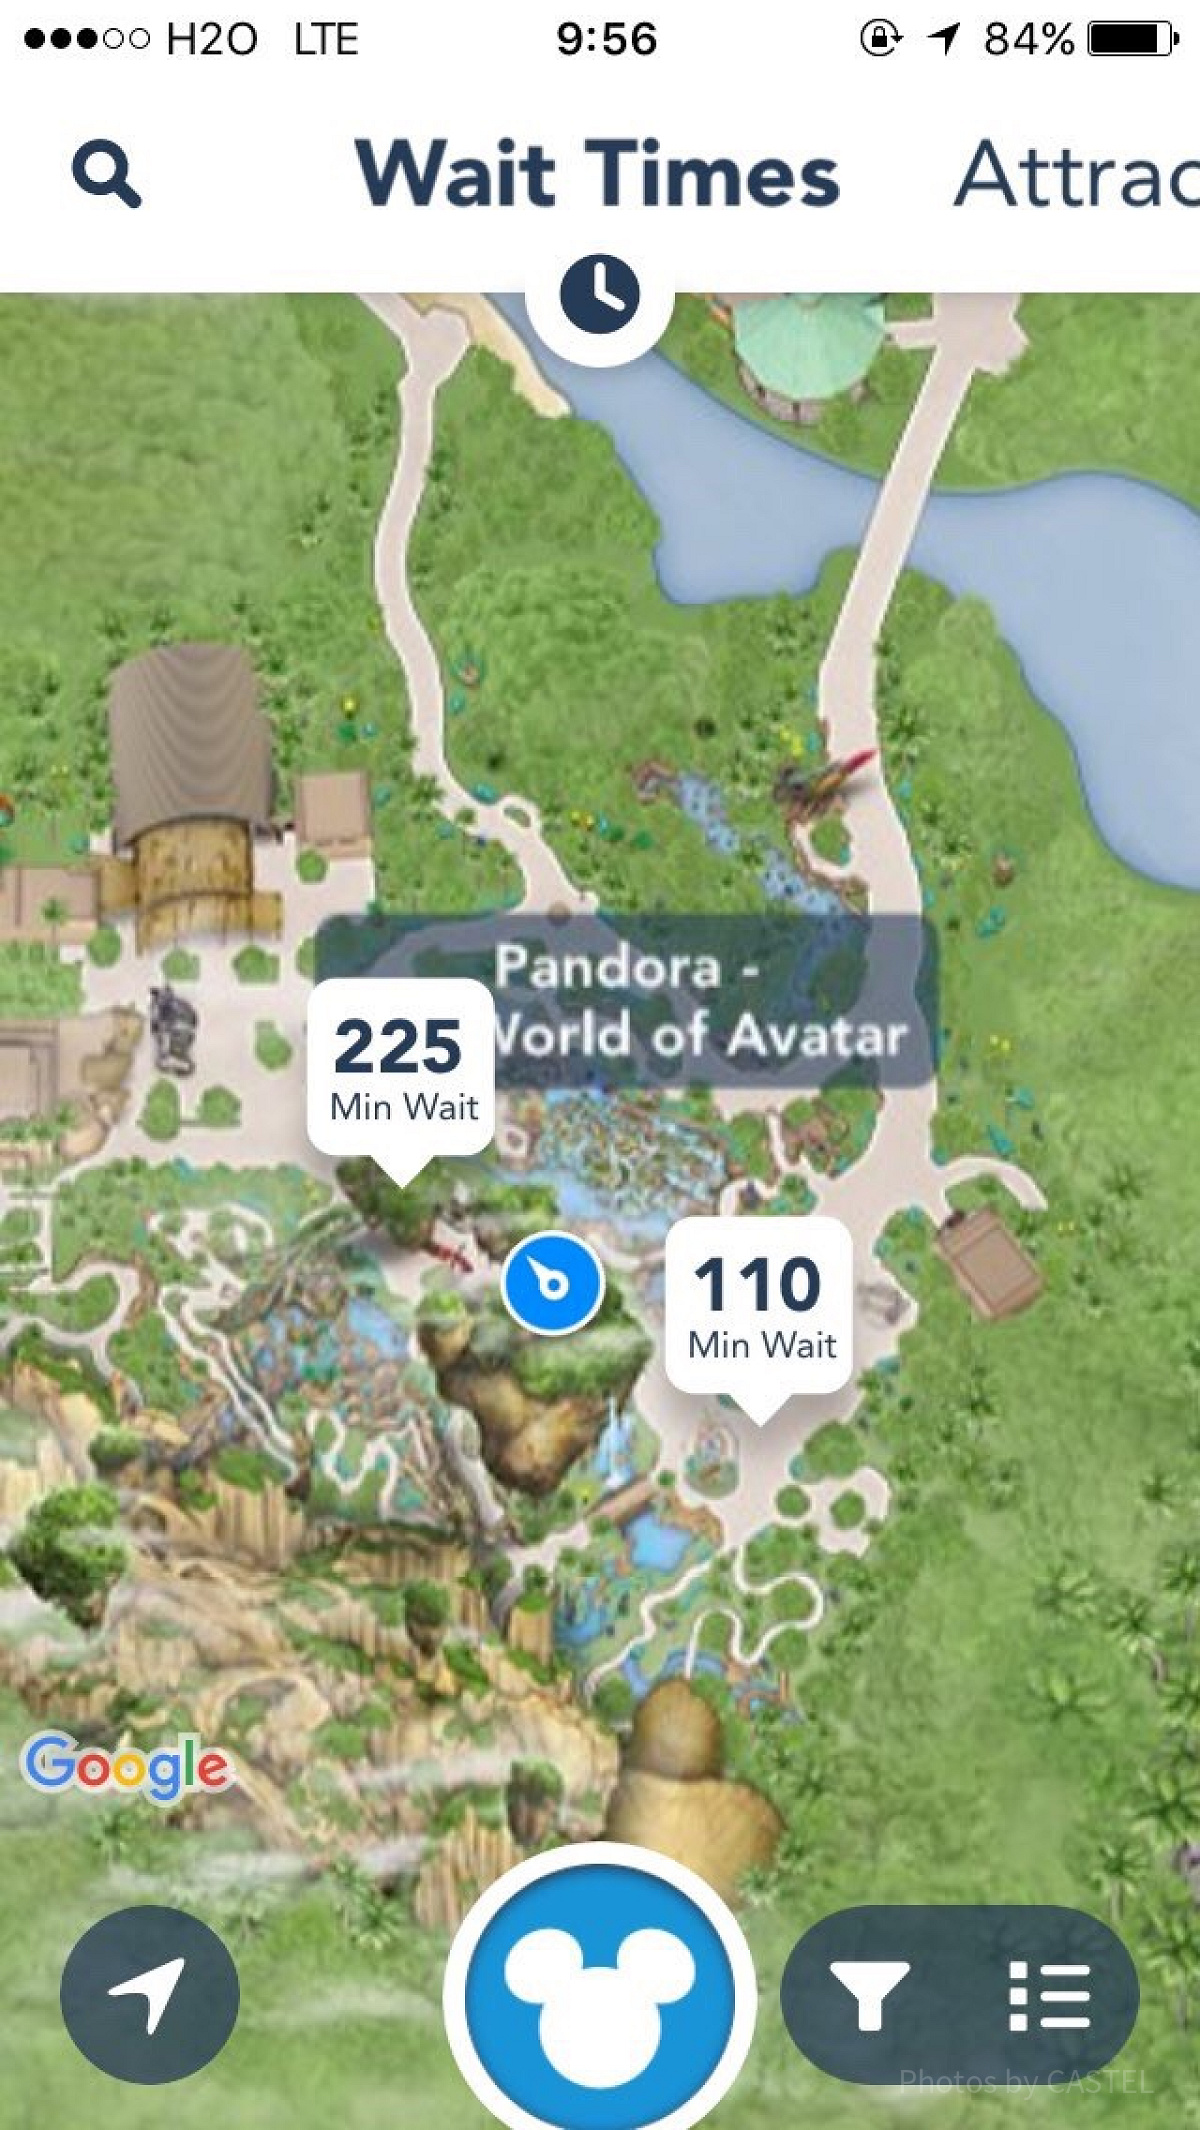 WDW公式アプリ「Disney My Experience」 アトラクションも2つあり